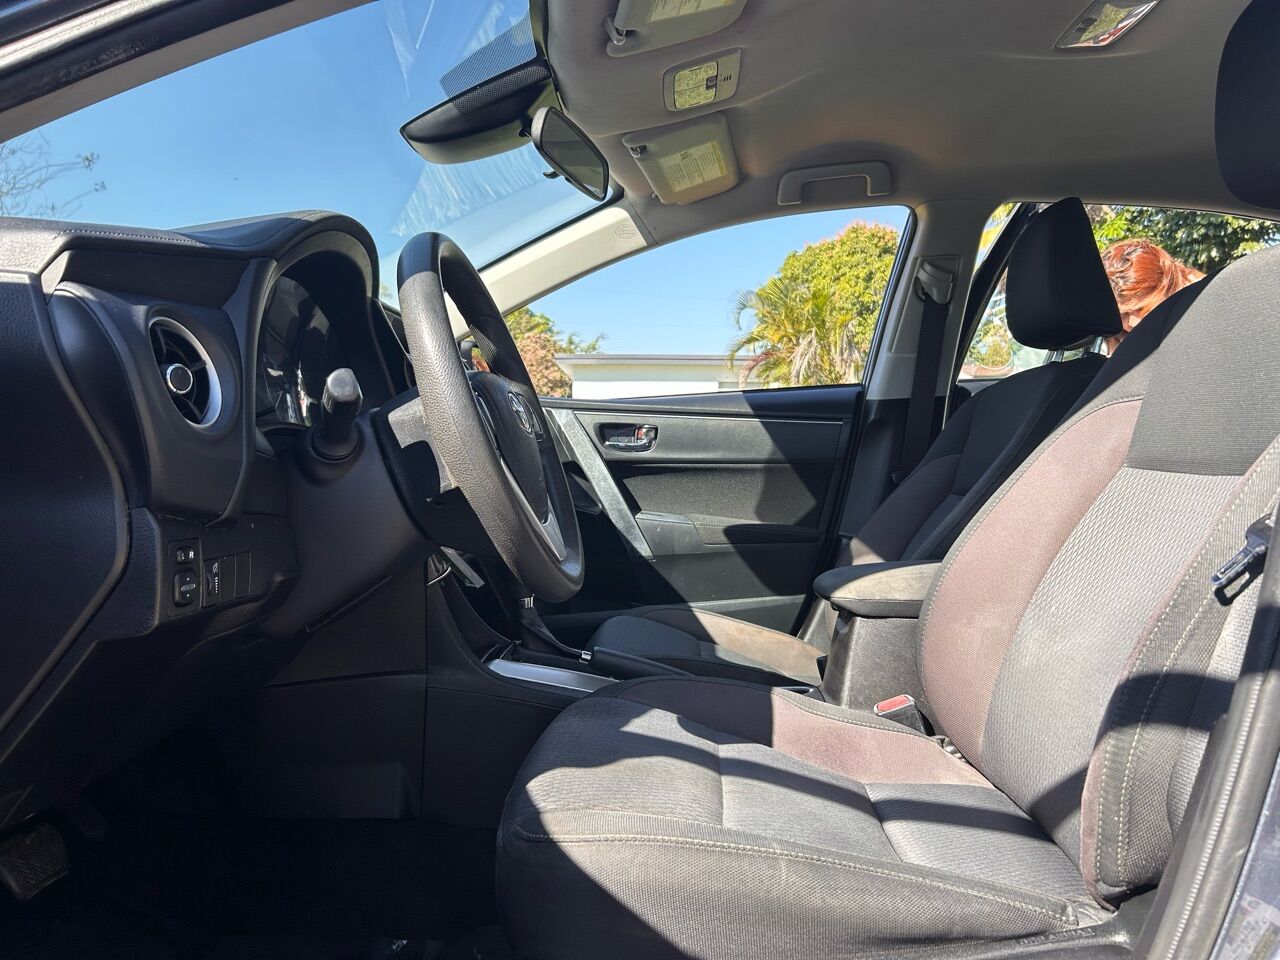 2019 TOYOTA Corolla Sedan - $13,725